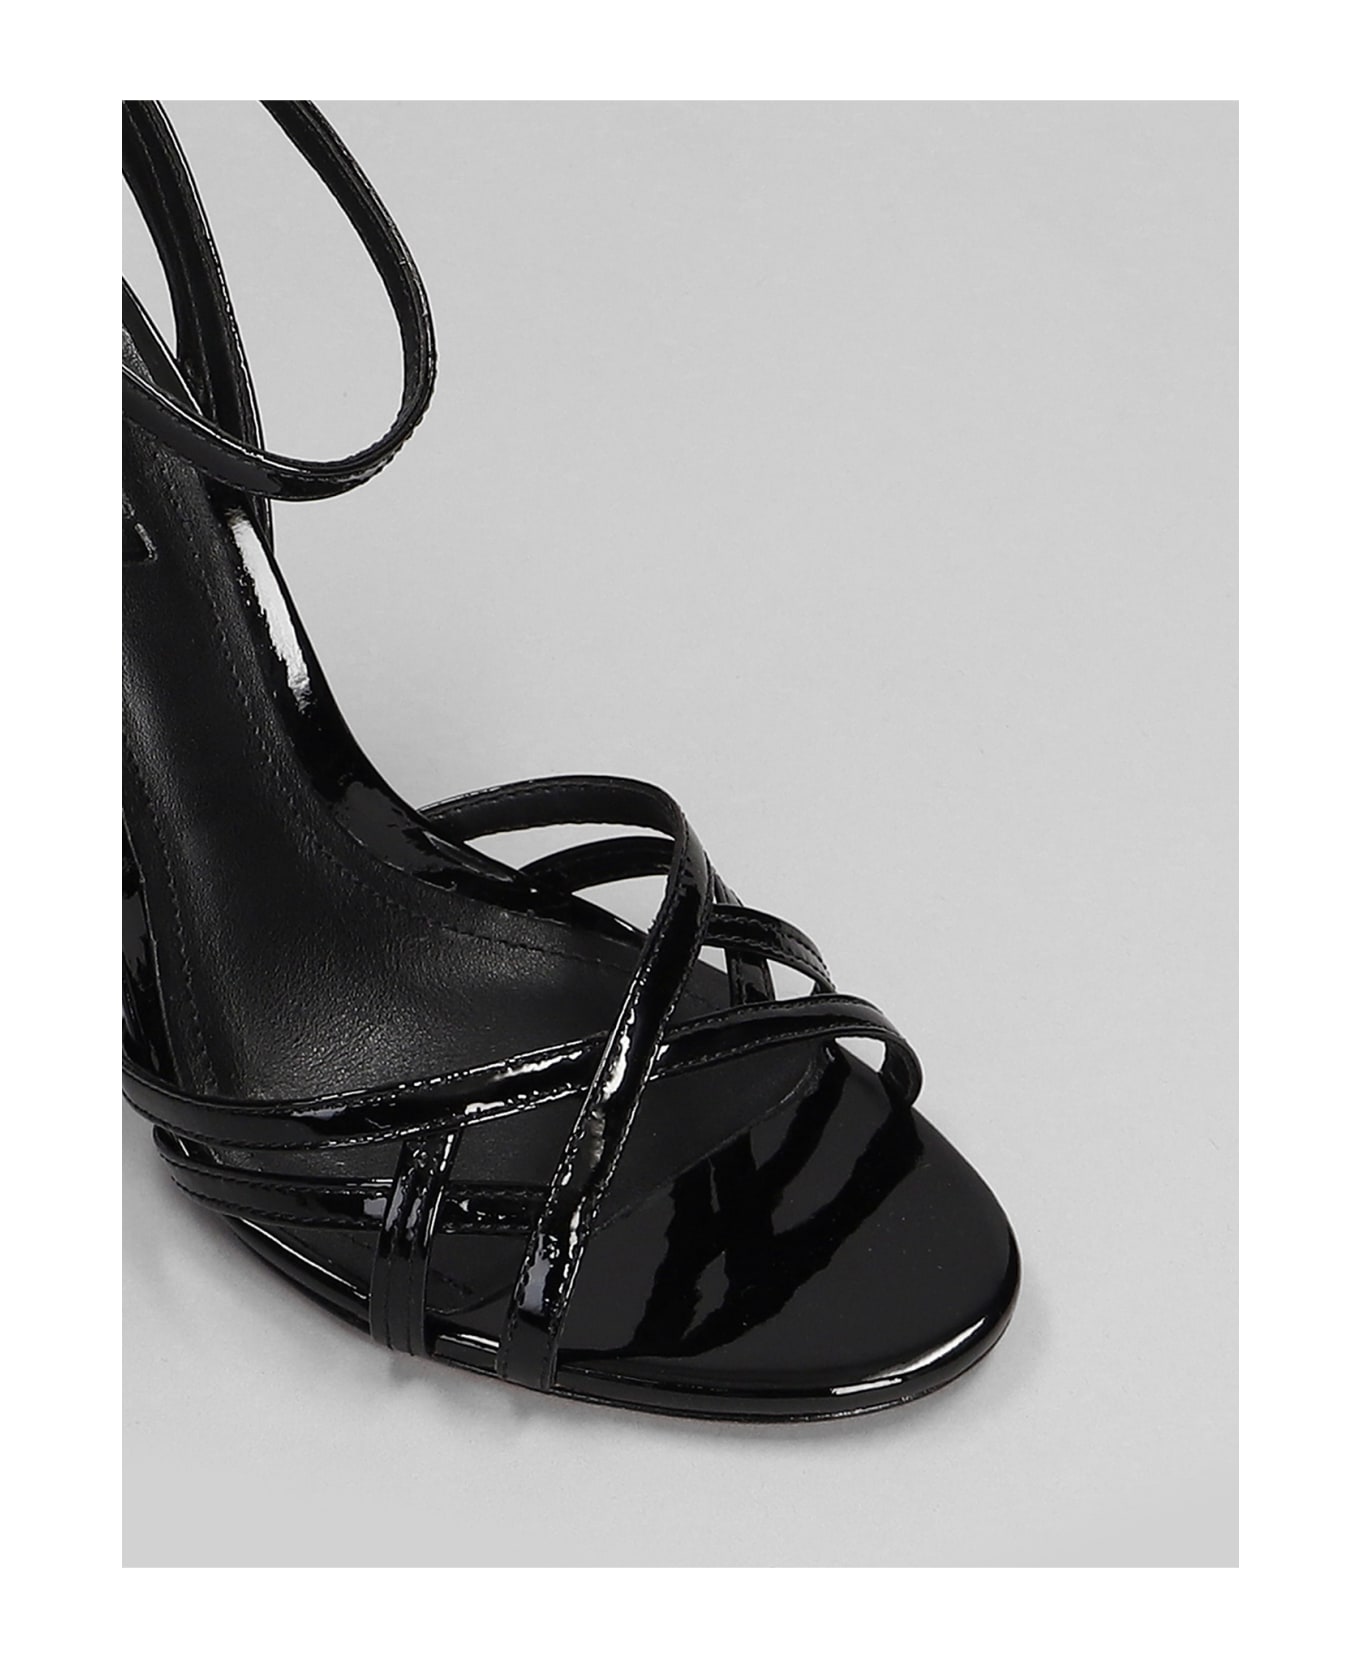 Schutz Sandals In Black Patent Leather - black サンダル